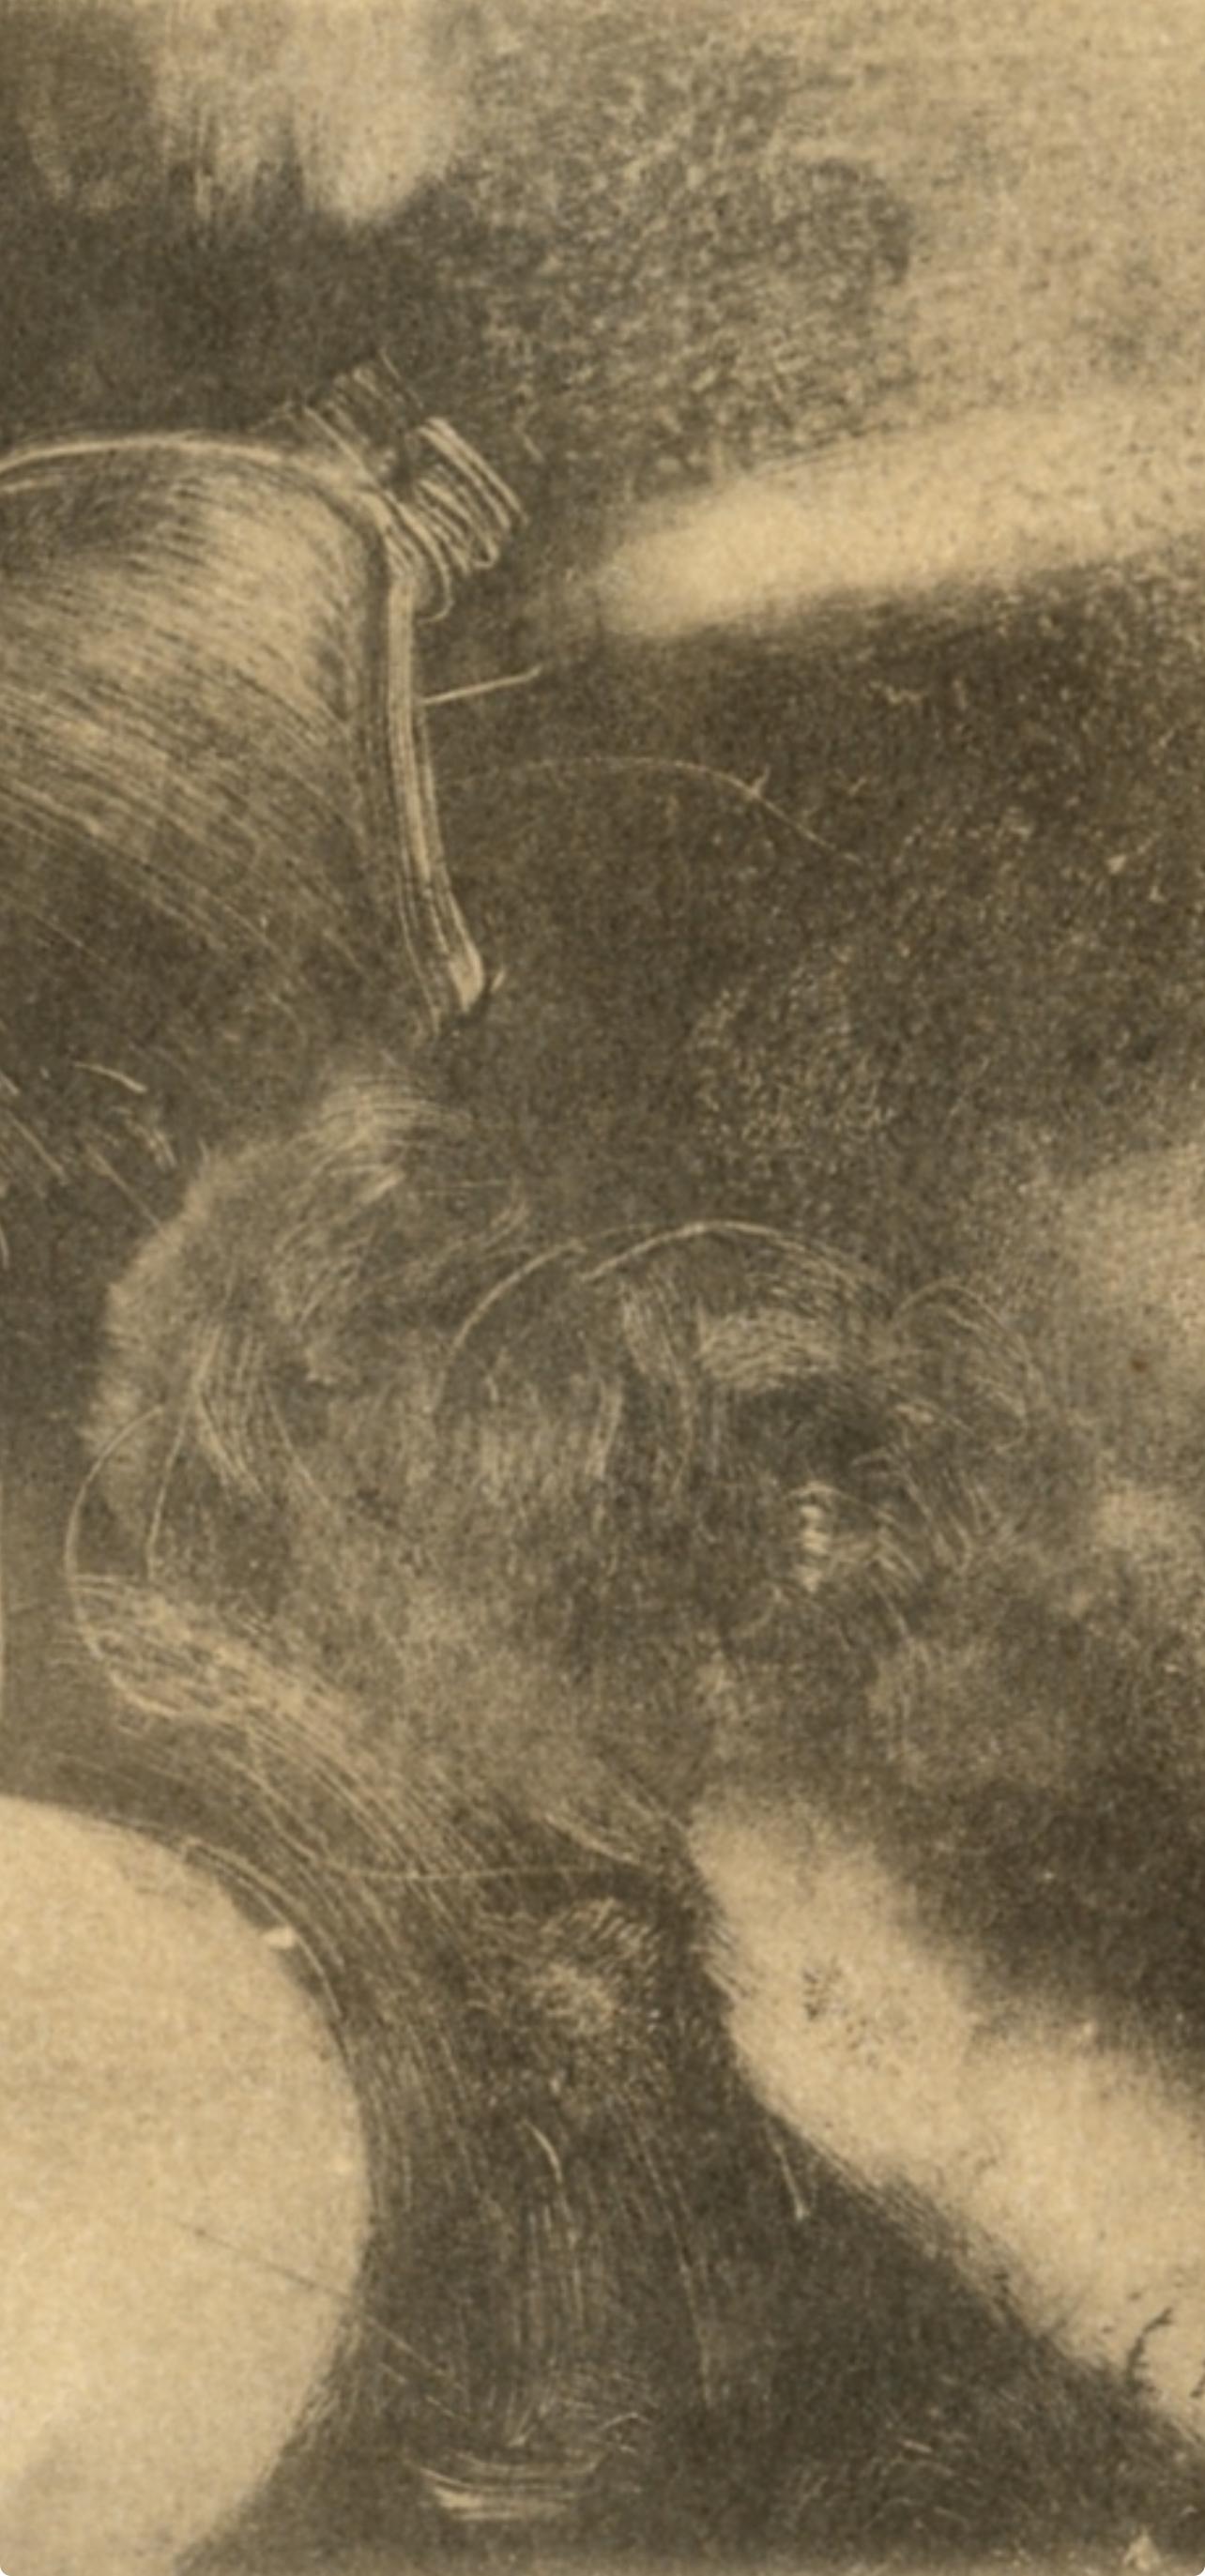 Degas, Nu couche, Les Monotypes (after) - Print by Edgar Degas